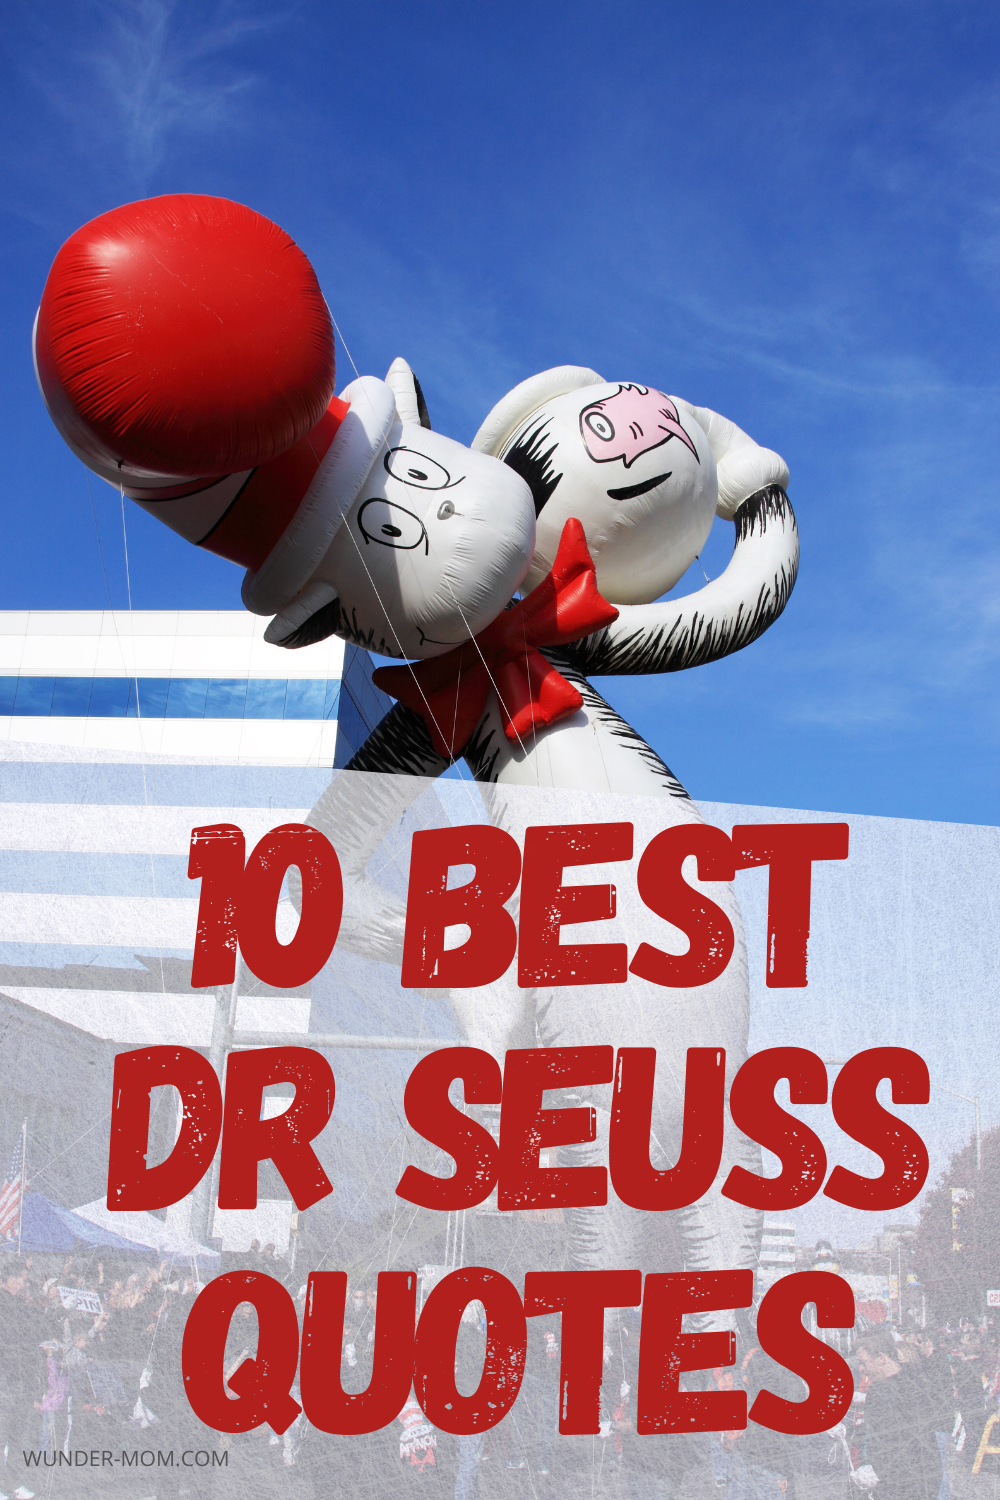 10 best dr suss quotes 